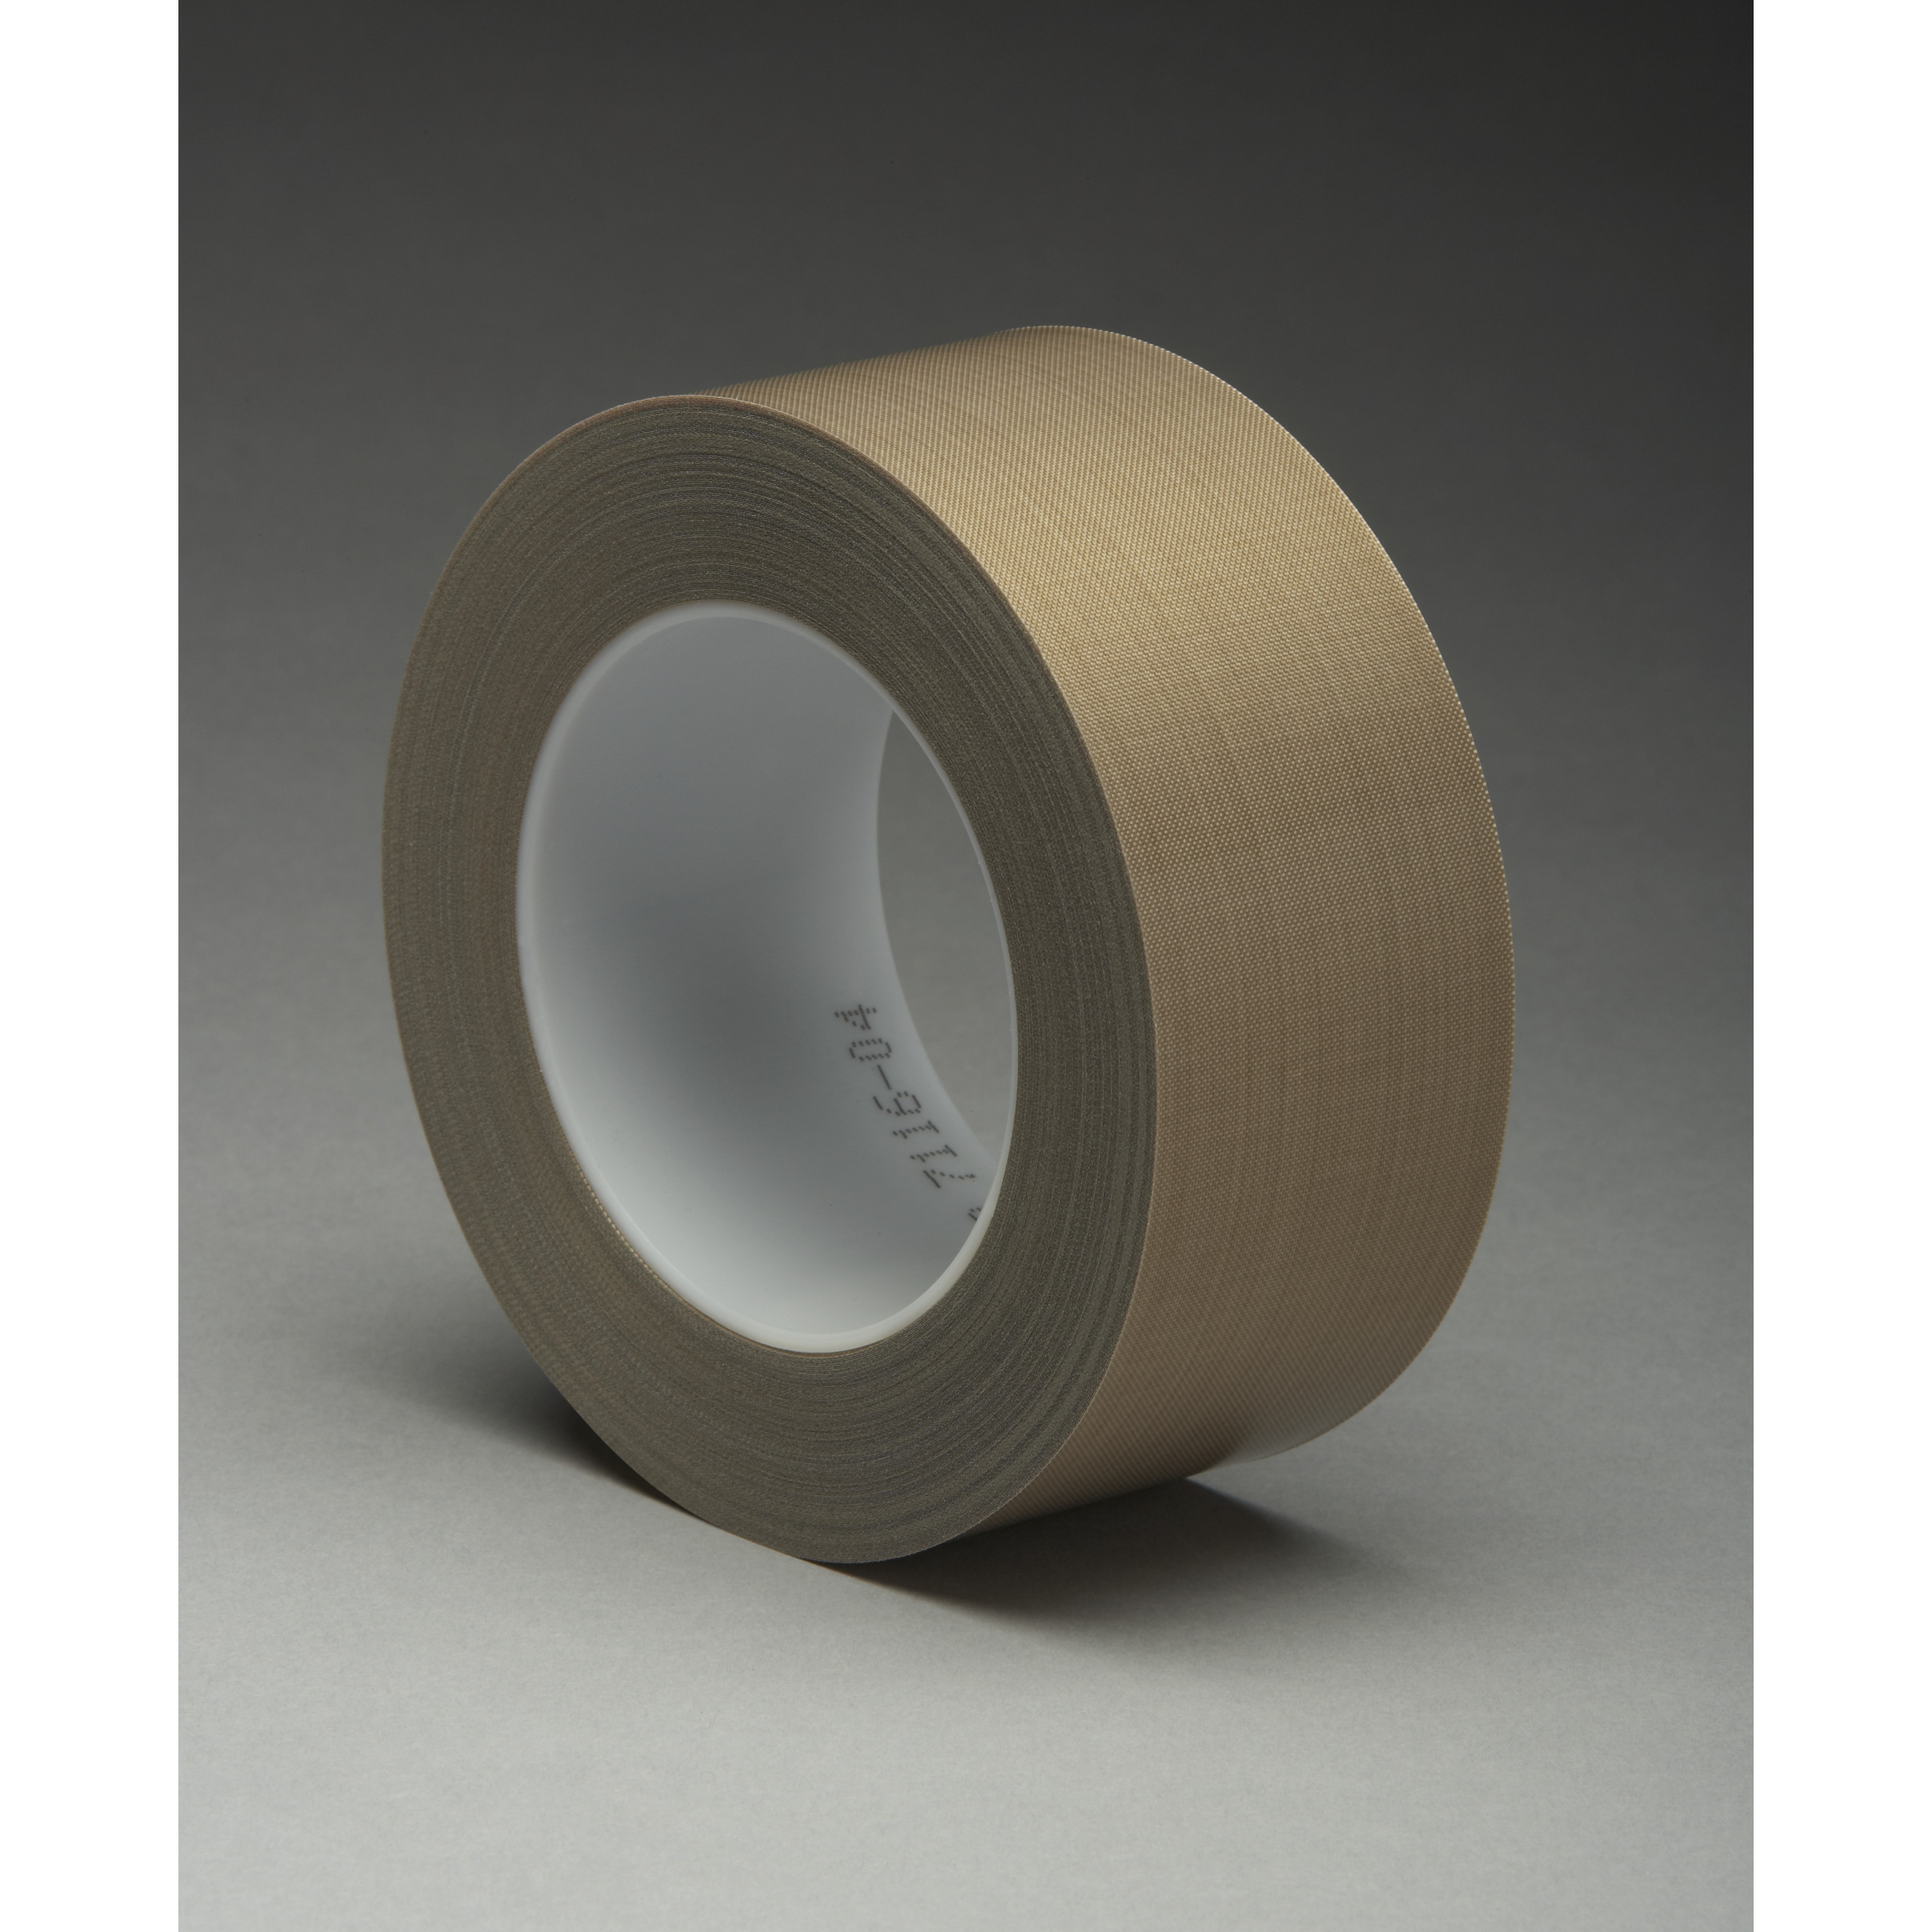 3M™ PTFE Glass Cloth Tape 5453, Brown, 4 in x 36 yd, 8.2 mil, 3 rolls
per case